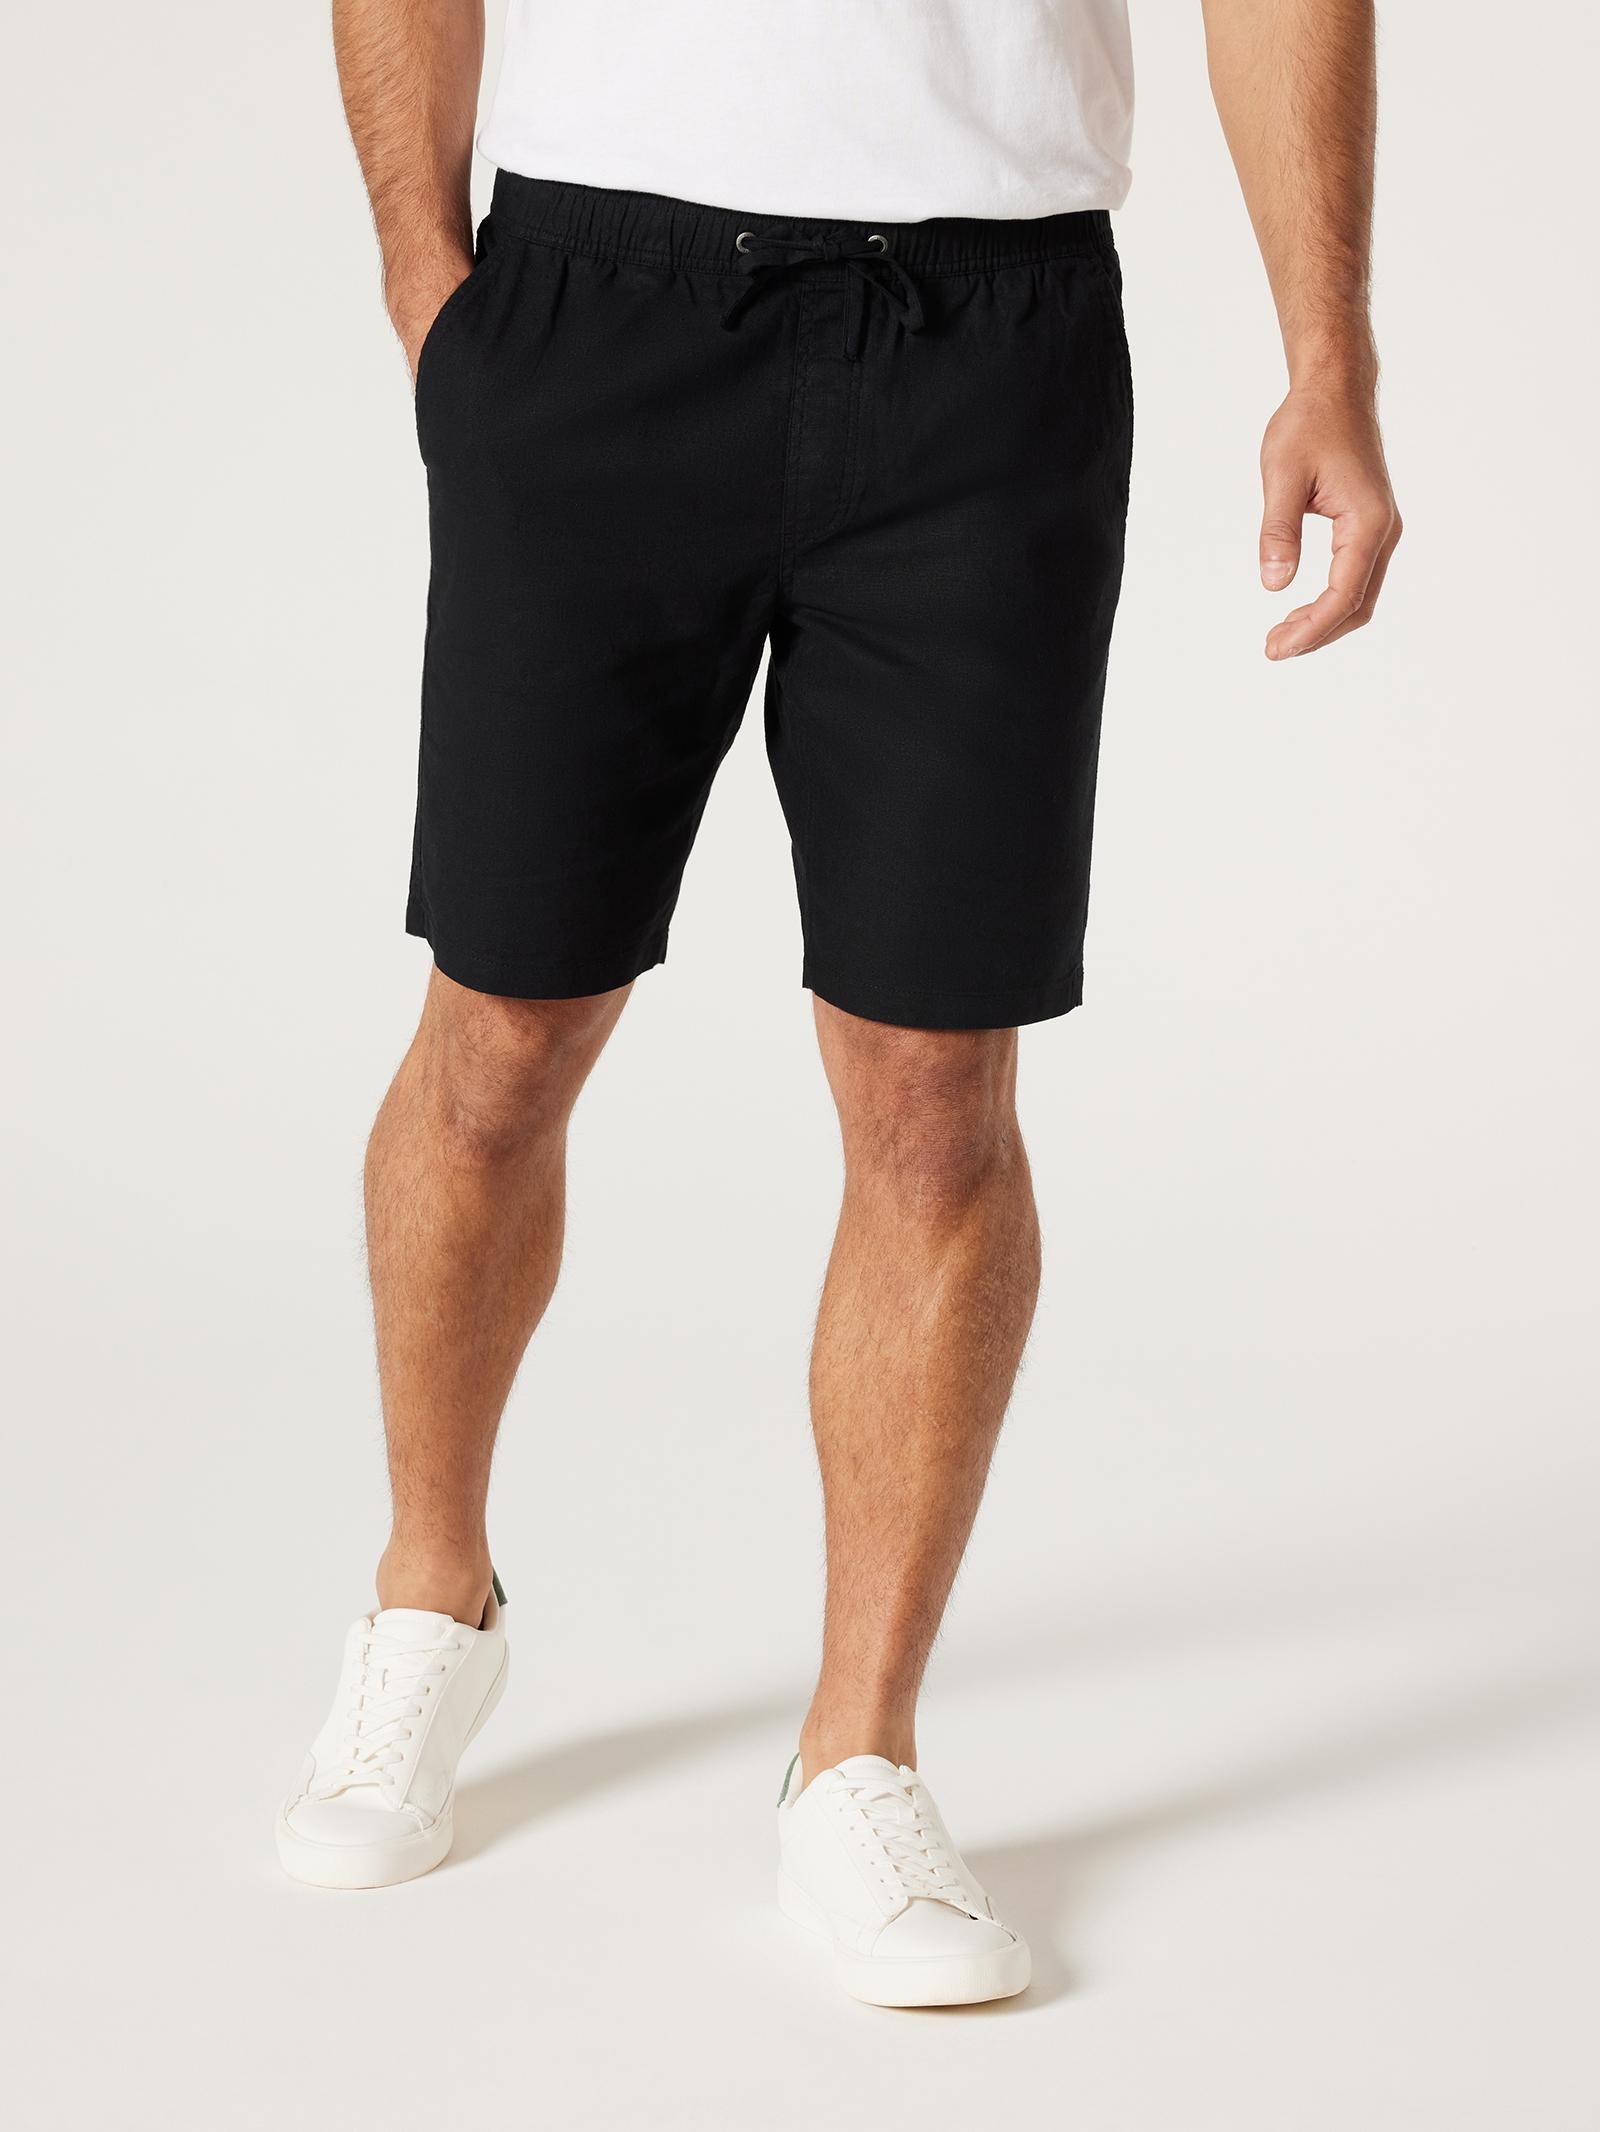 Ready Stock】 Women Casual Short pants Elastic Waist New Summer Style Cotton  Linen Wide Leg Pants Loose Beach Shorts